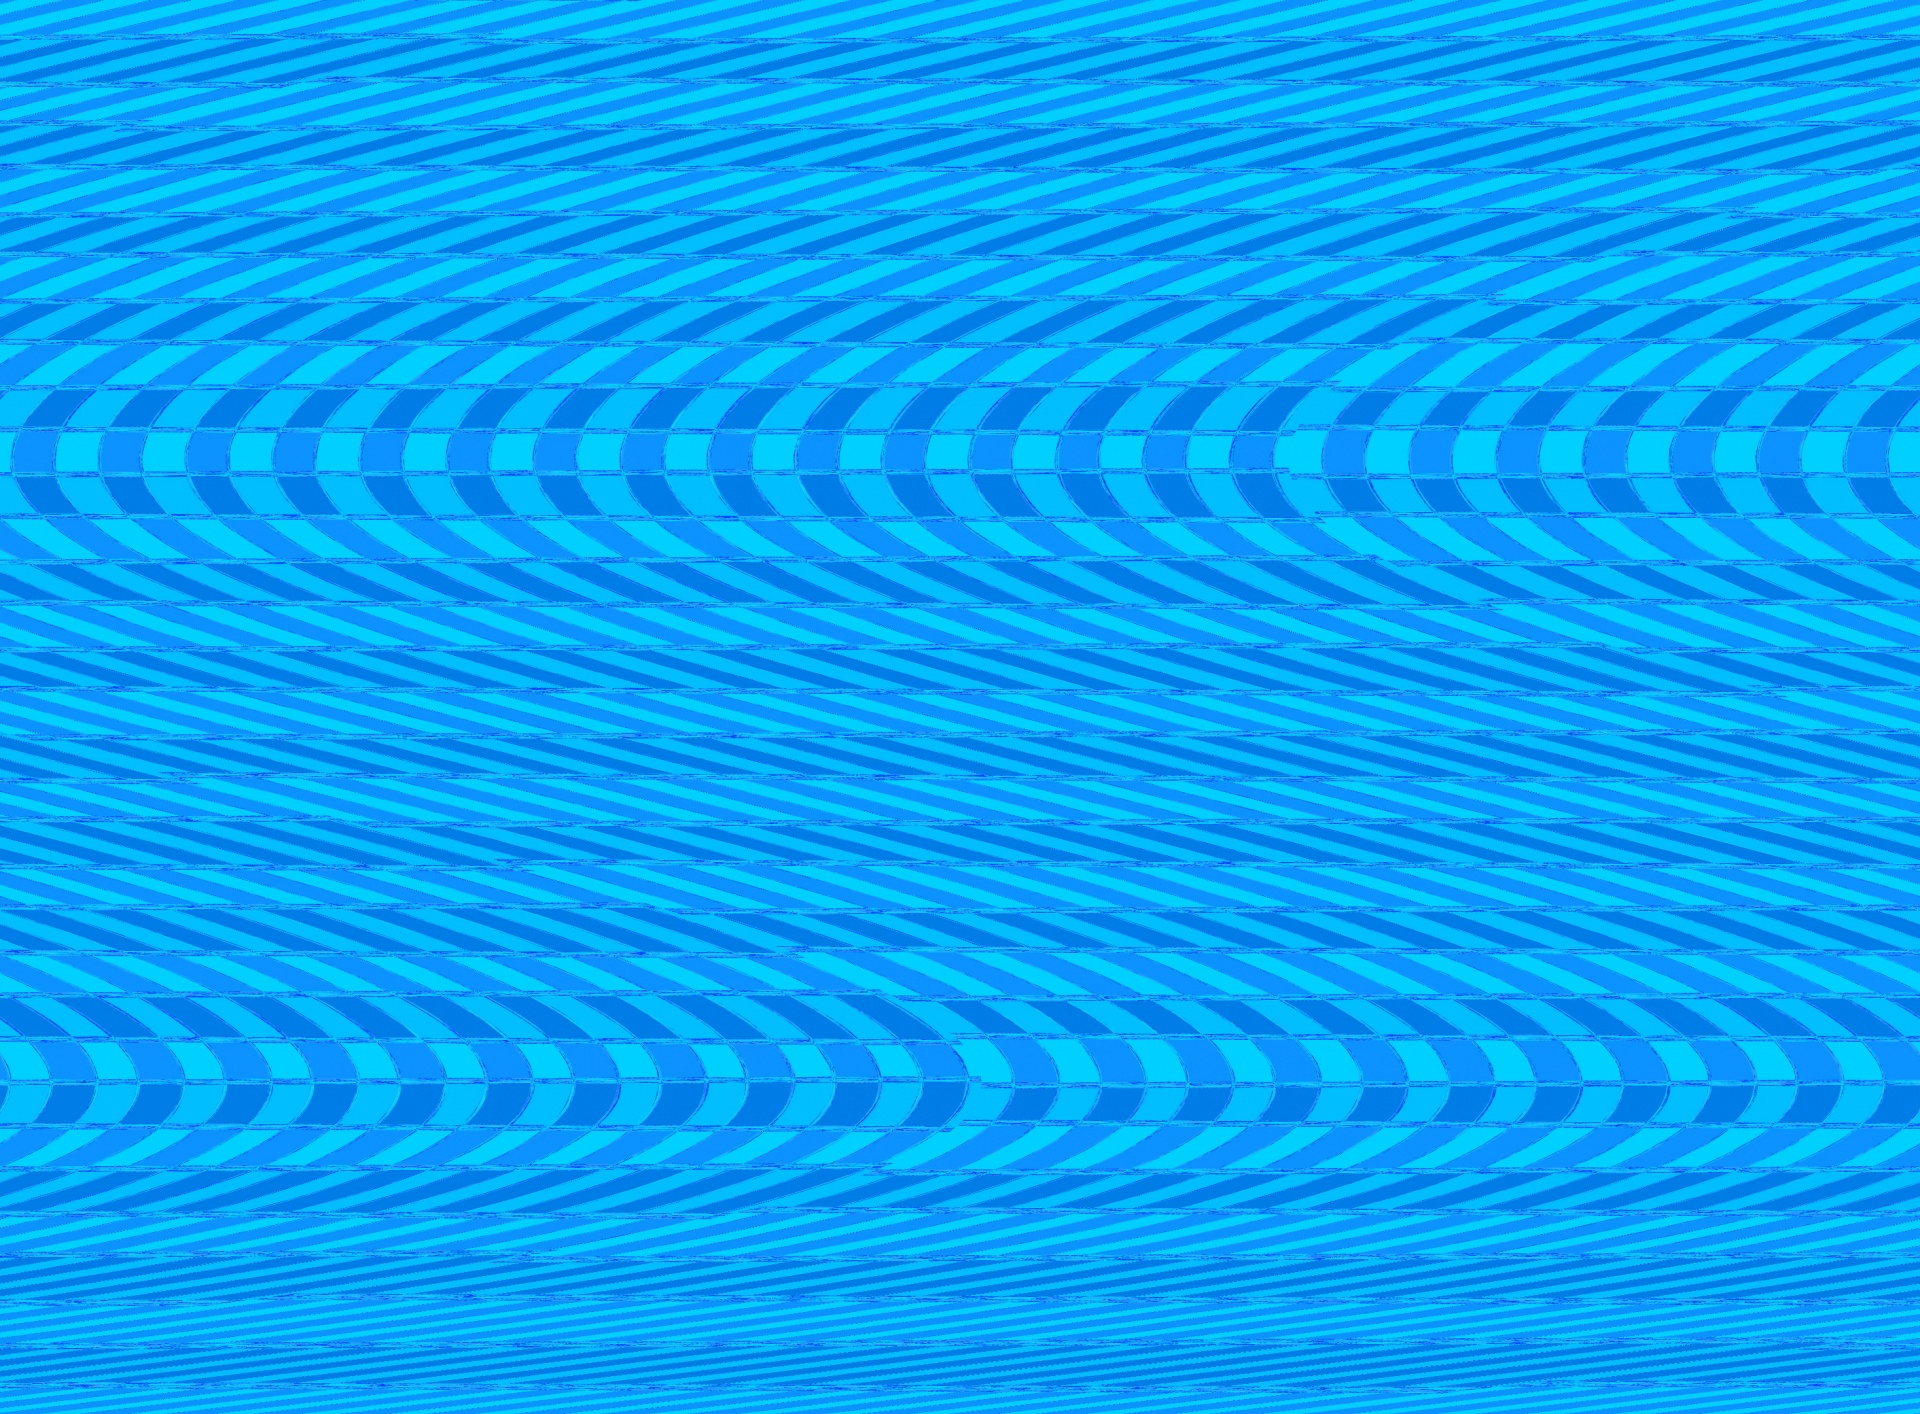 Blue Twisted Block Pattern